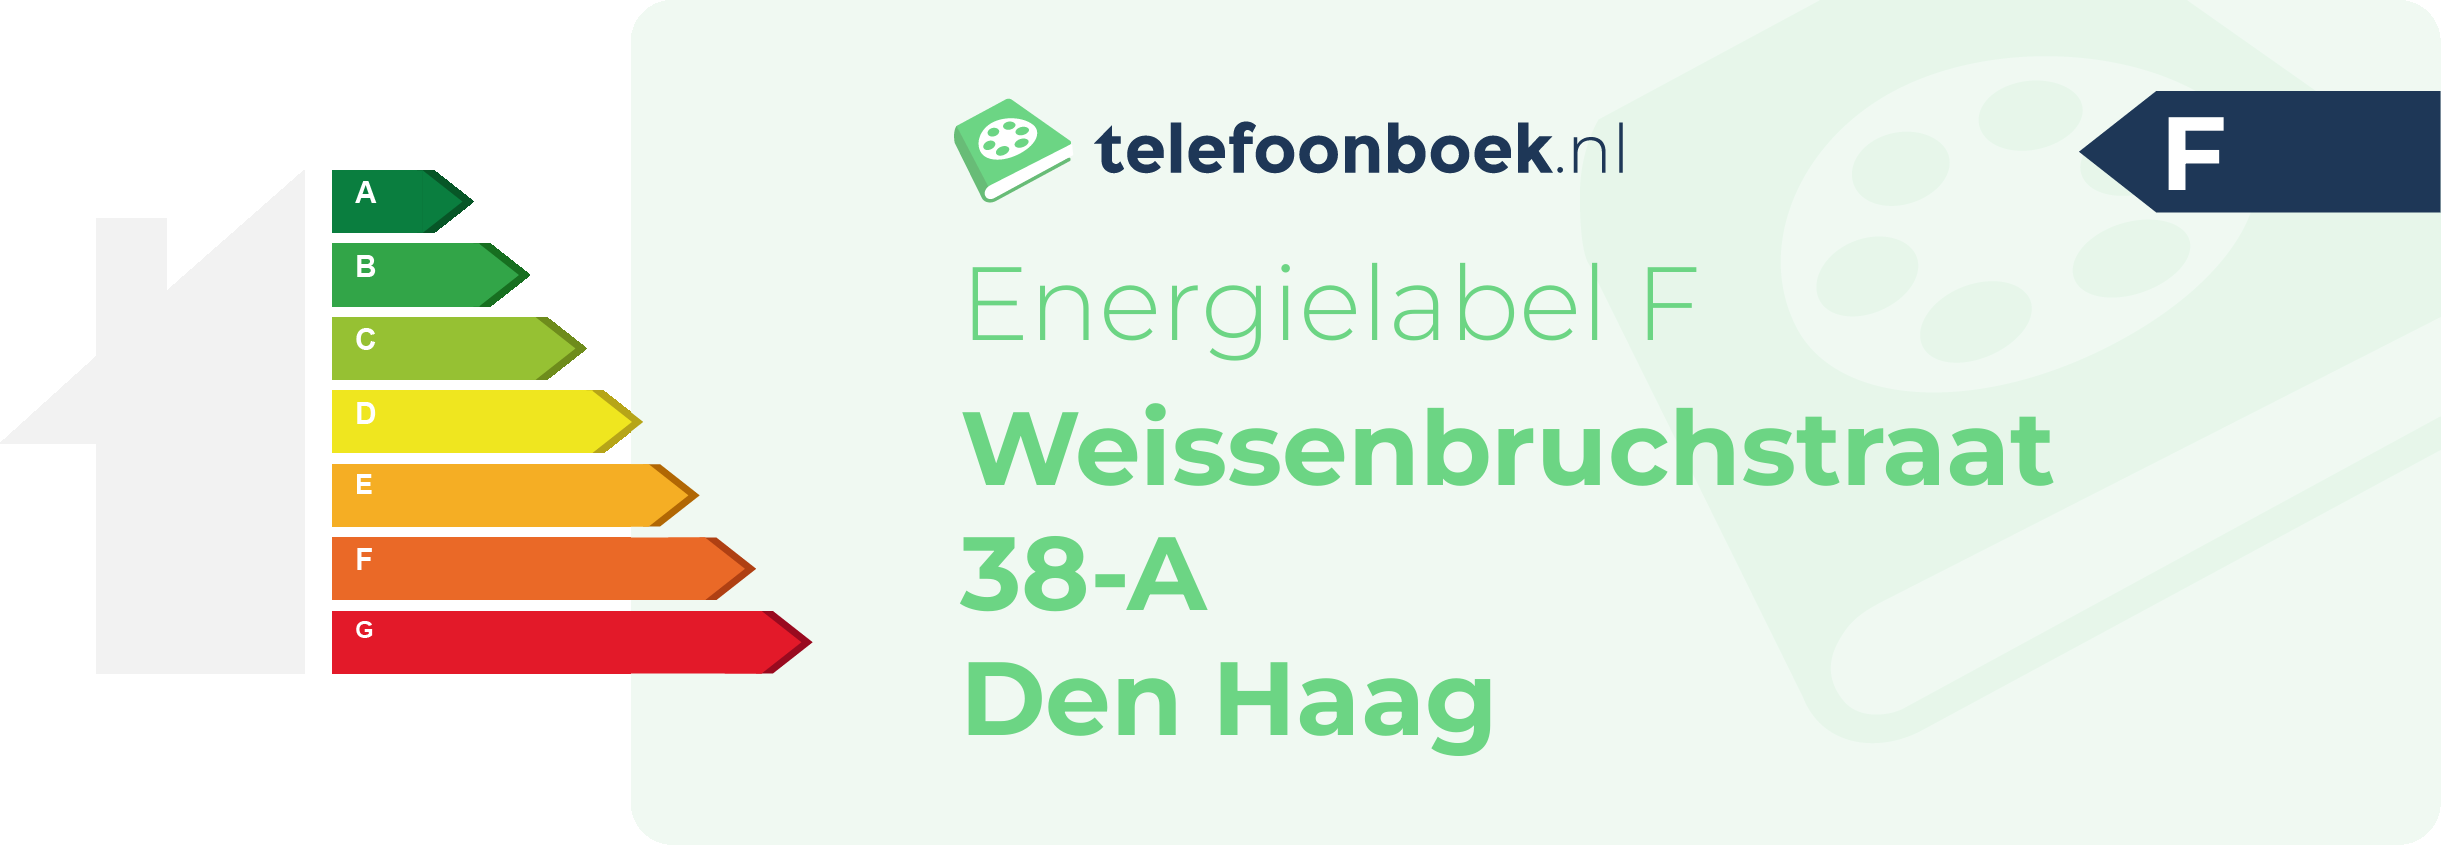 Energielabel Weissenbruchstraat 38-A Den Haag